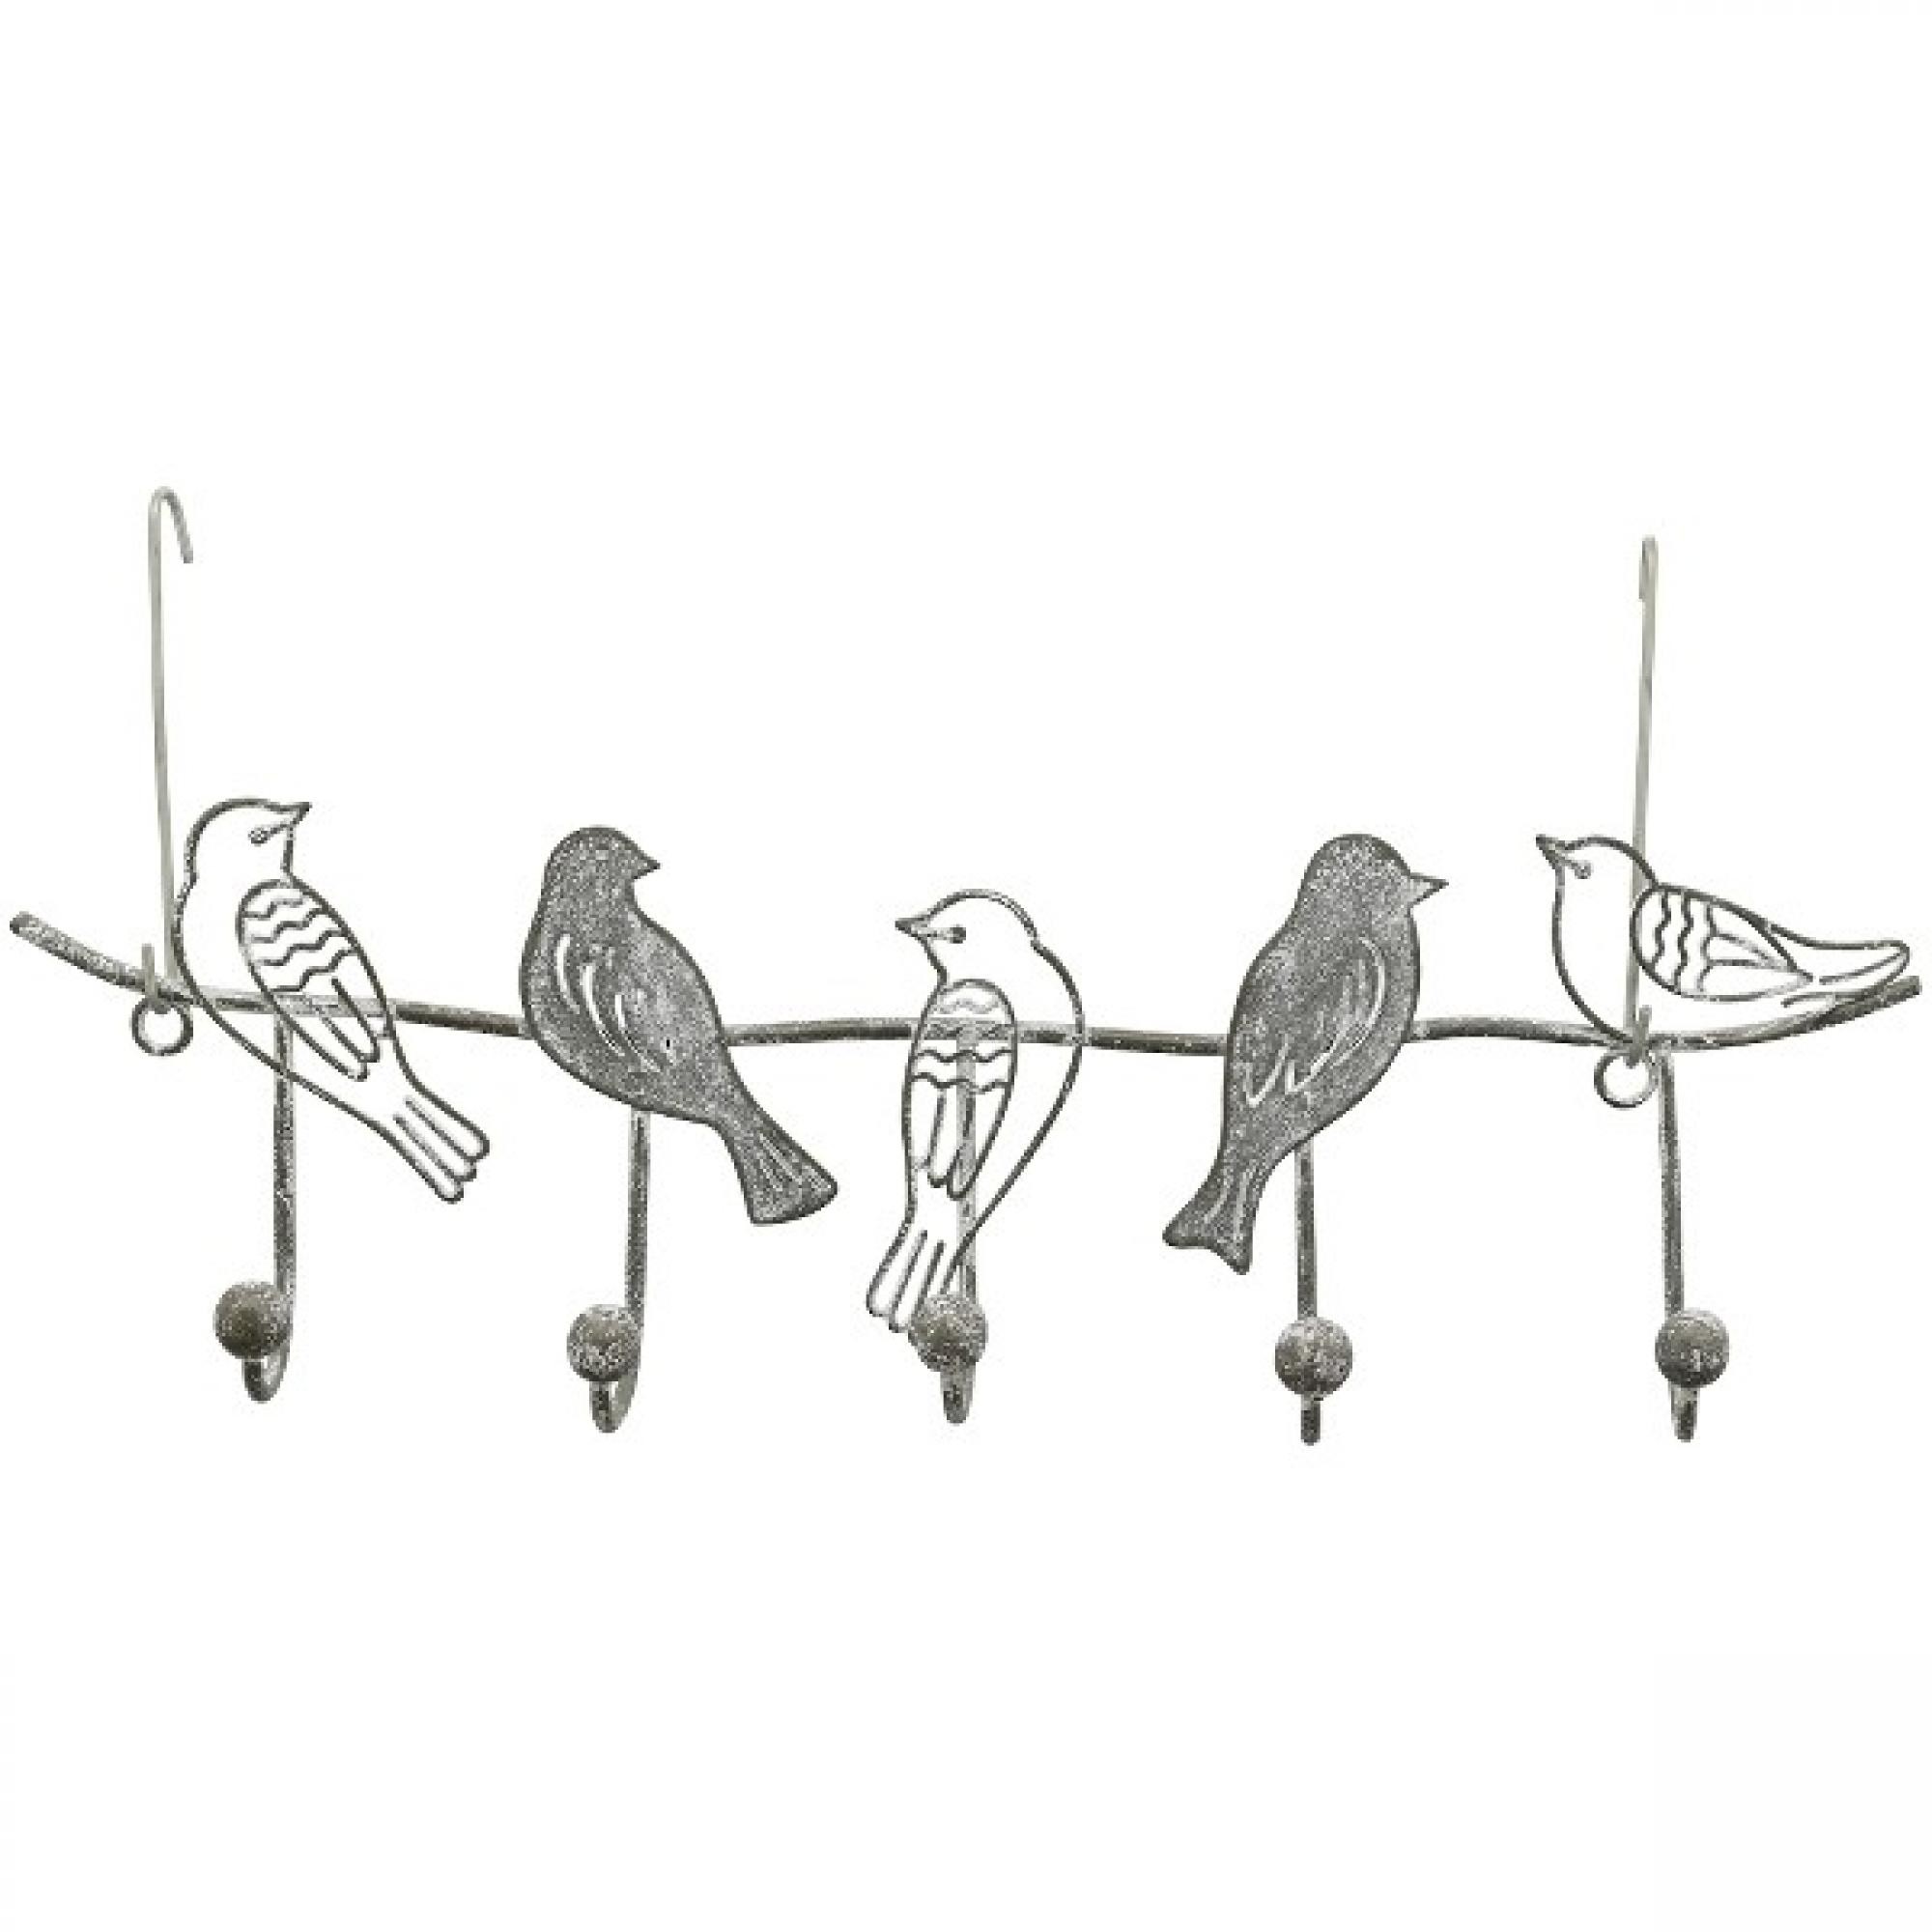 Hakenleiste 'Vögel' aus Metall